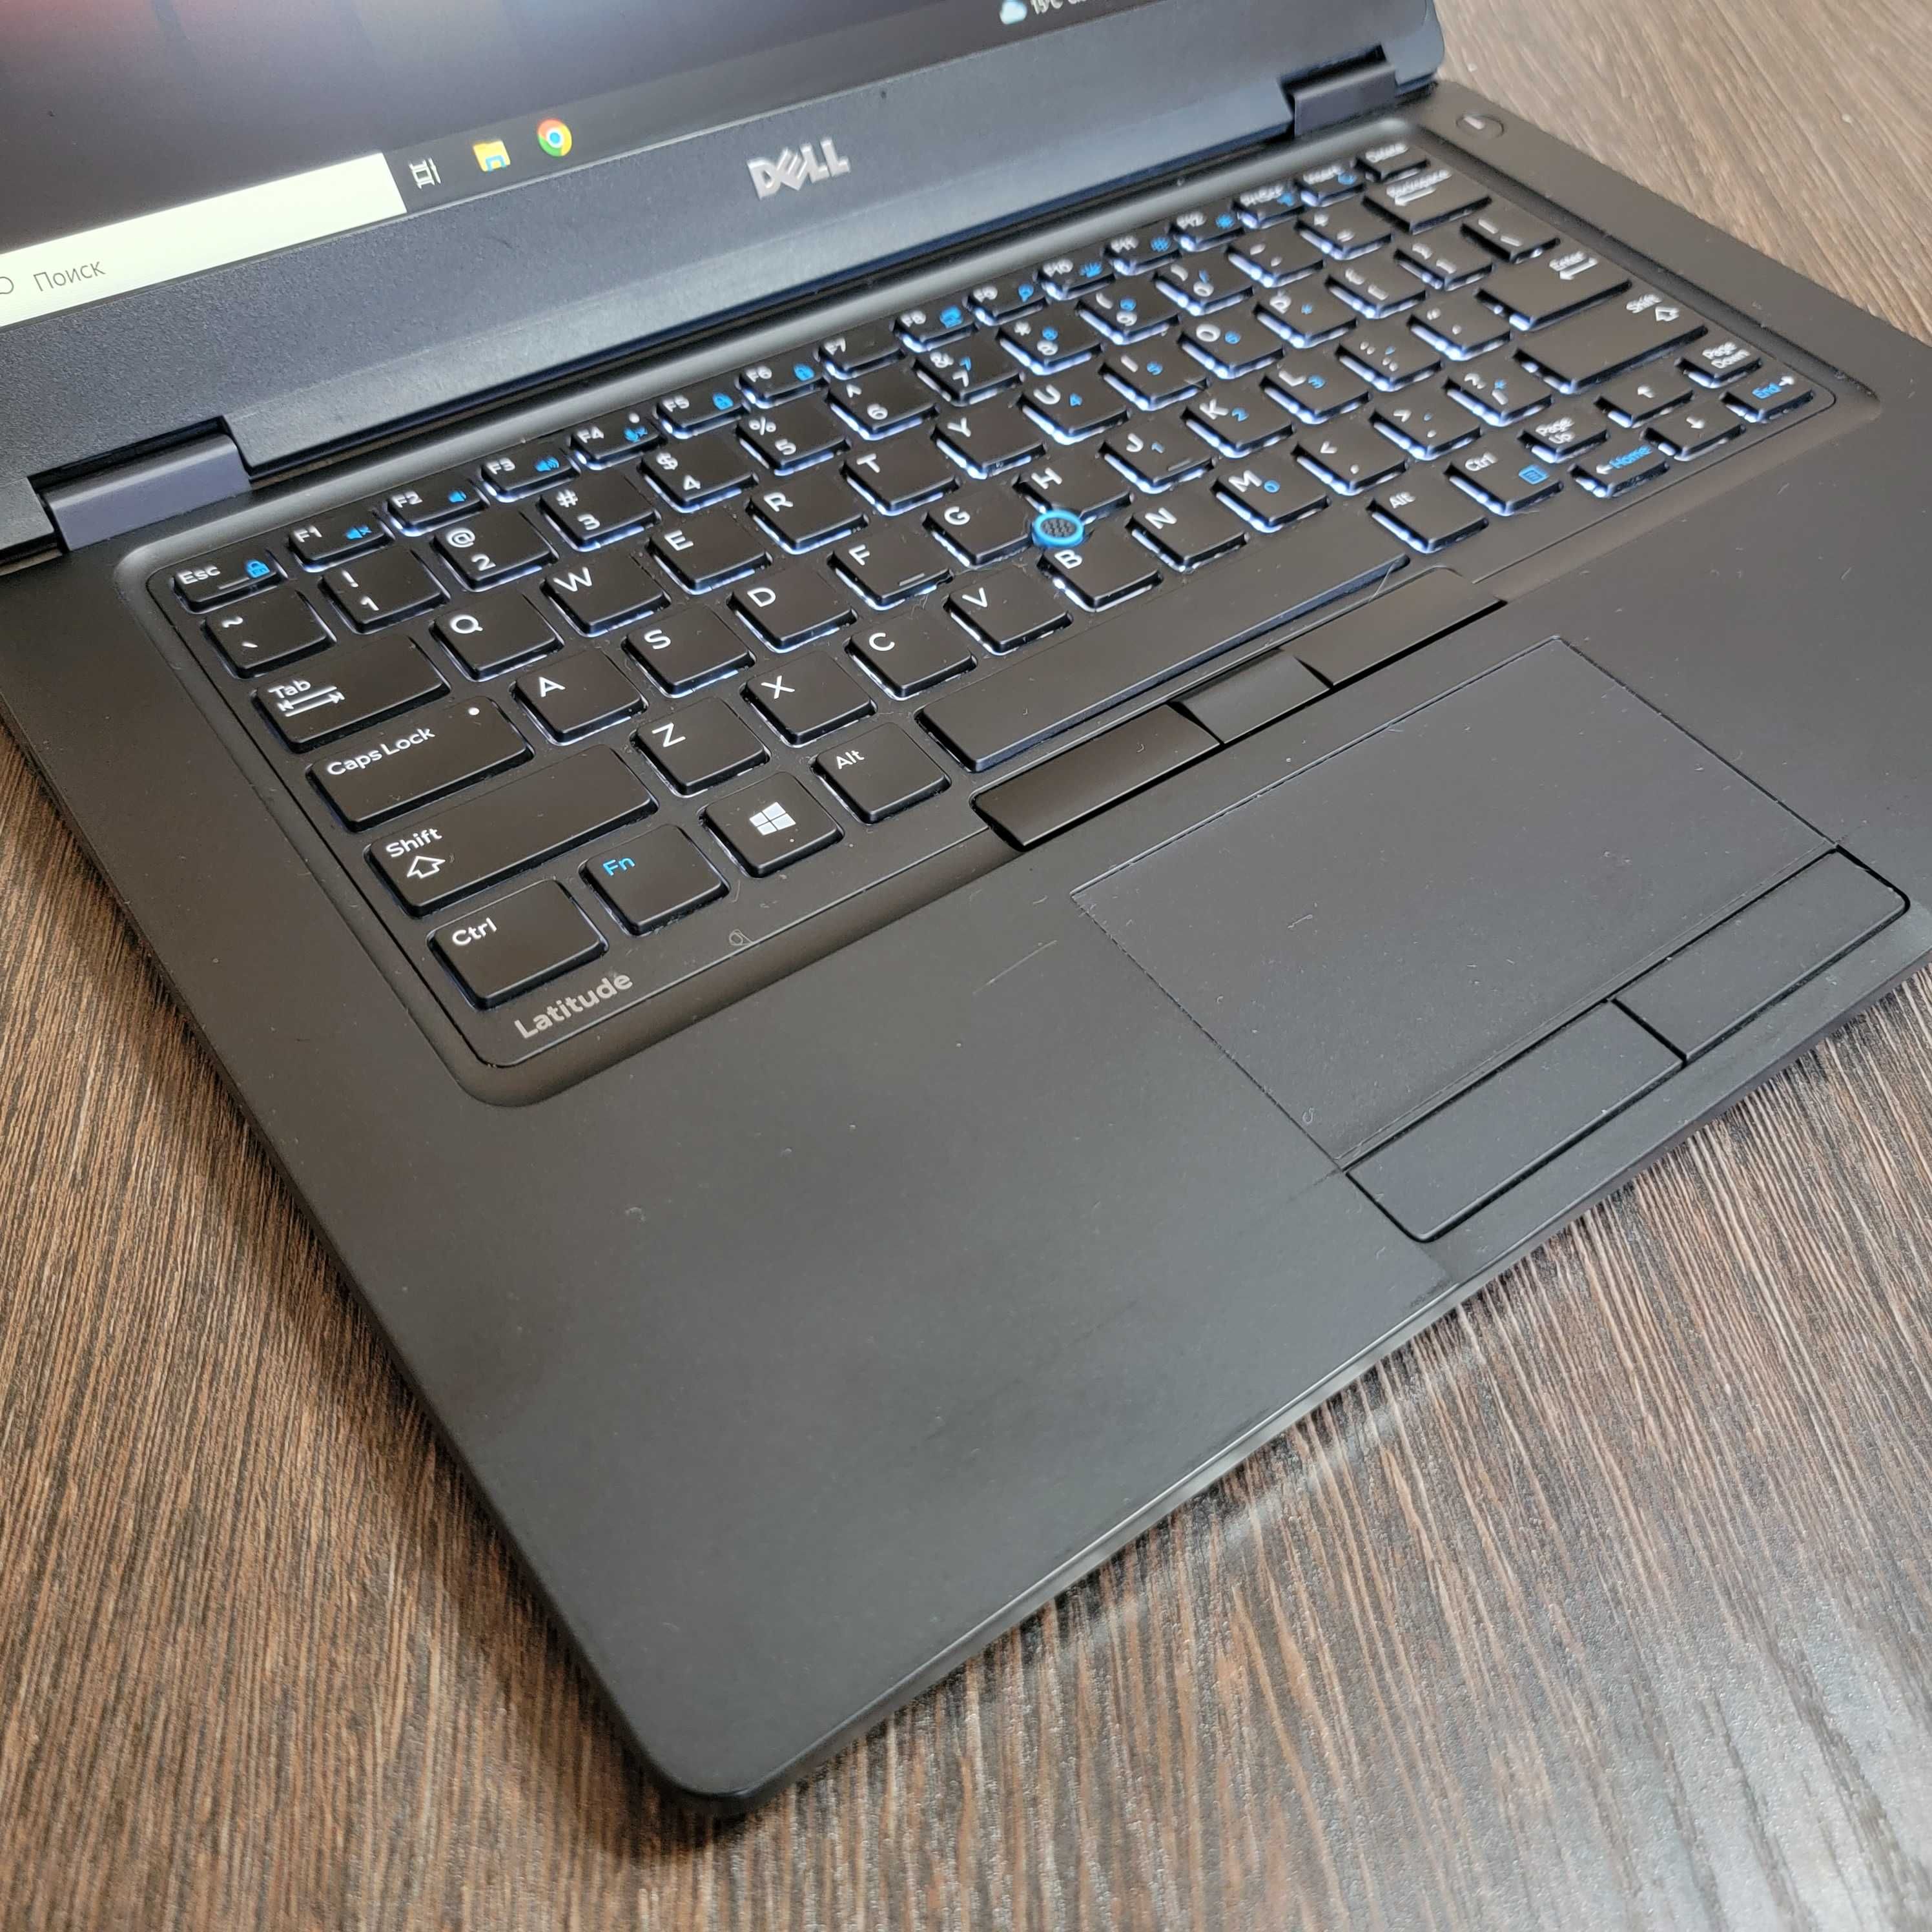 мощный i7 ноутбук Dell Latitude E5480, подсветка клавиатуры